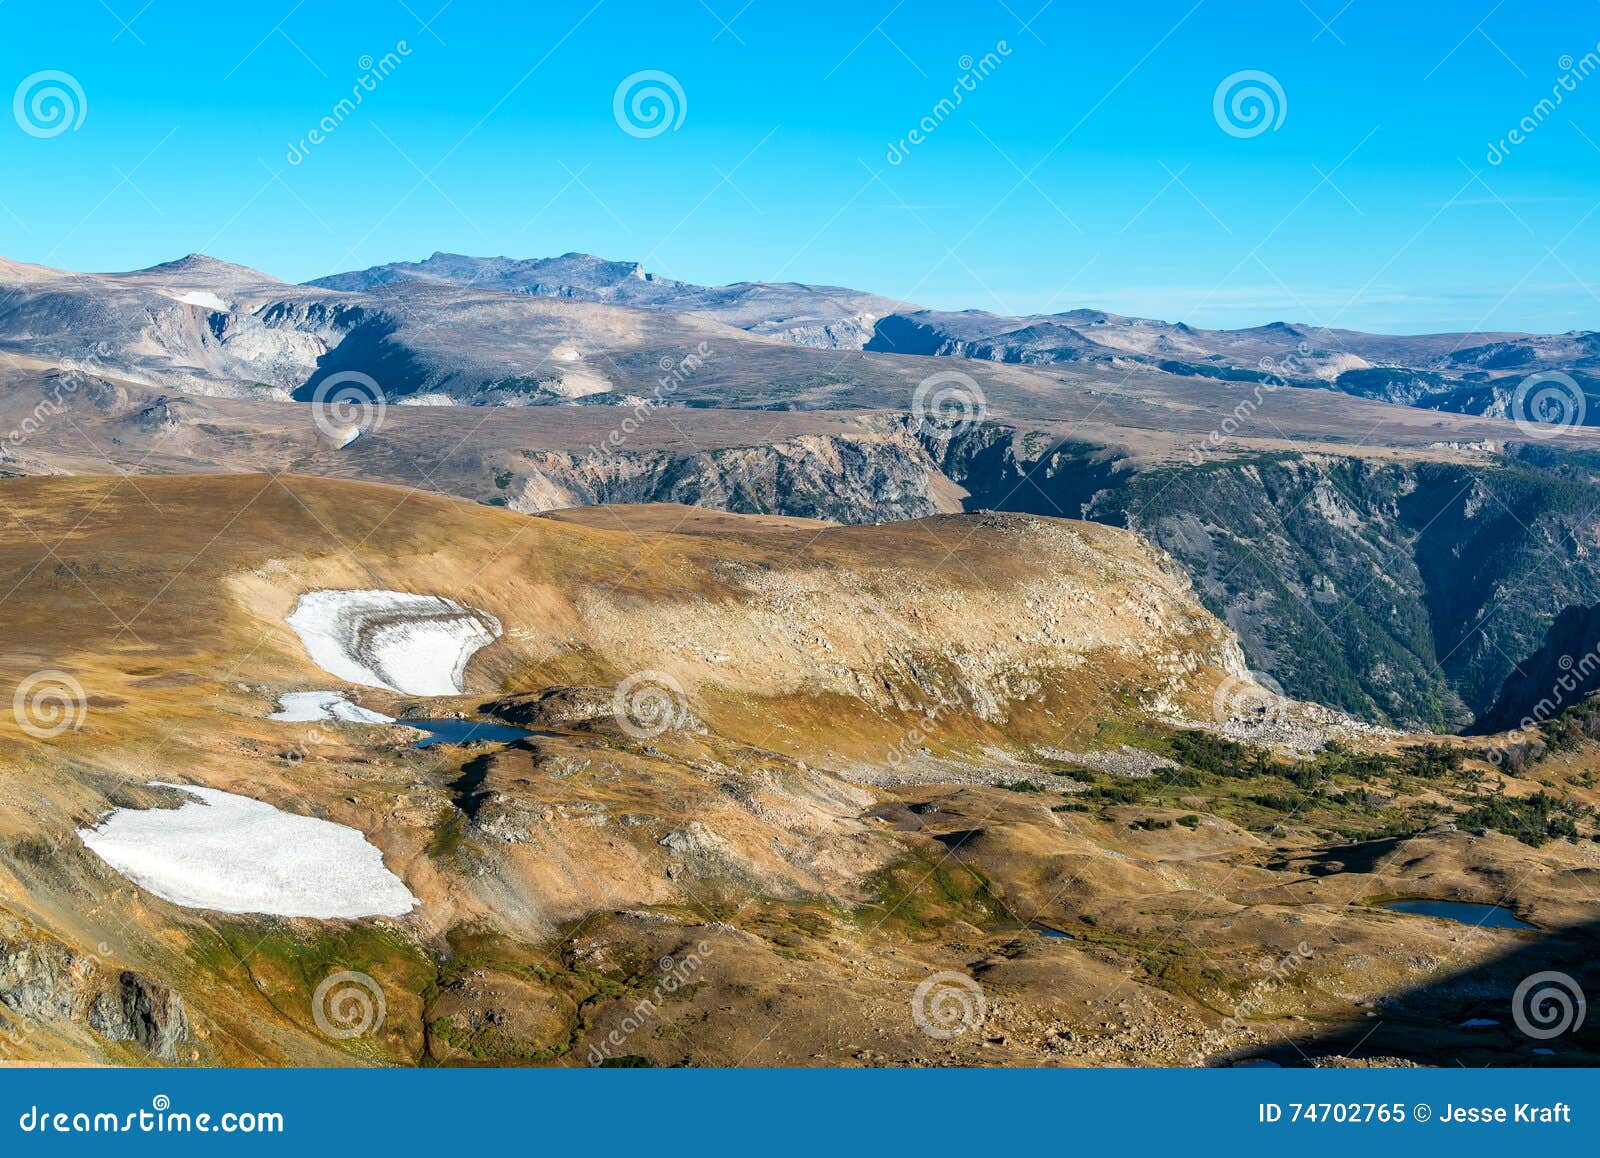 beartooth mountains landscape